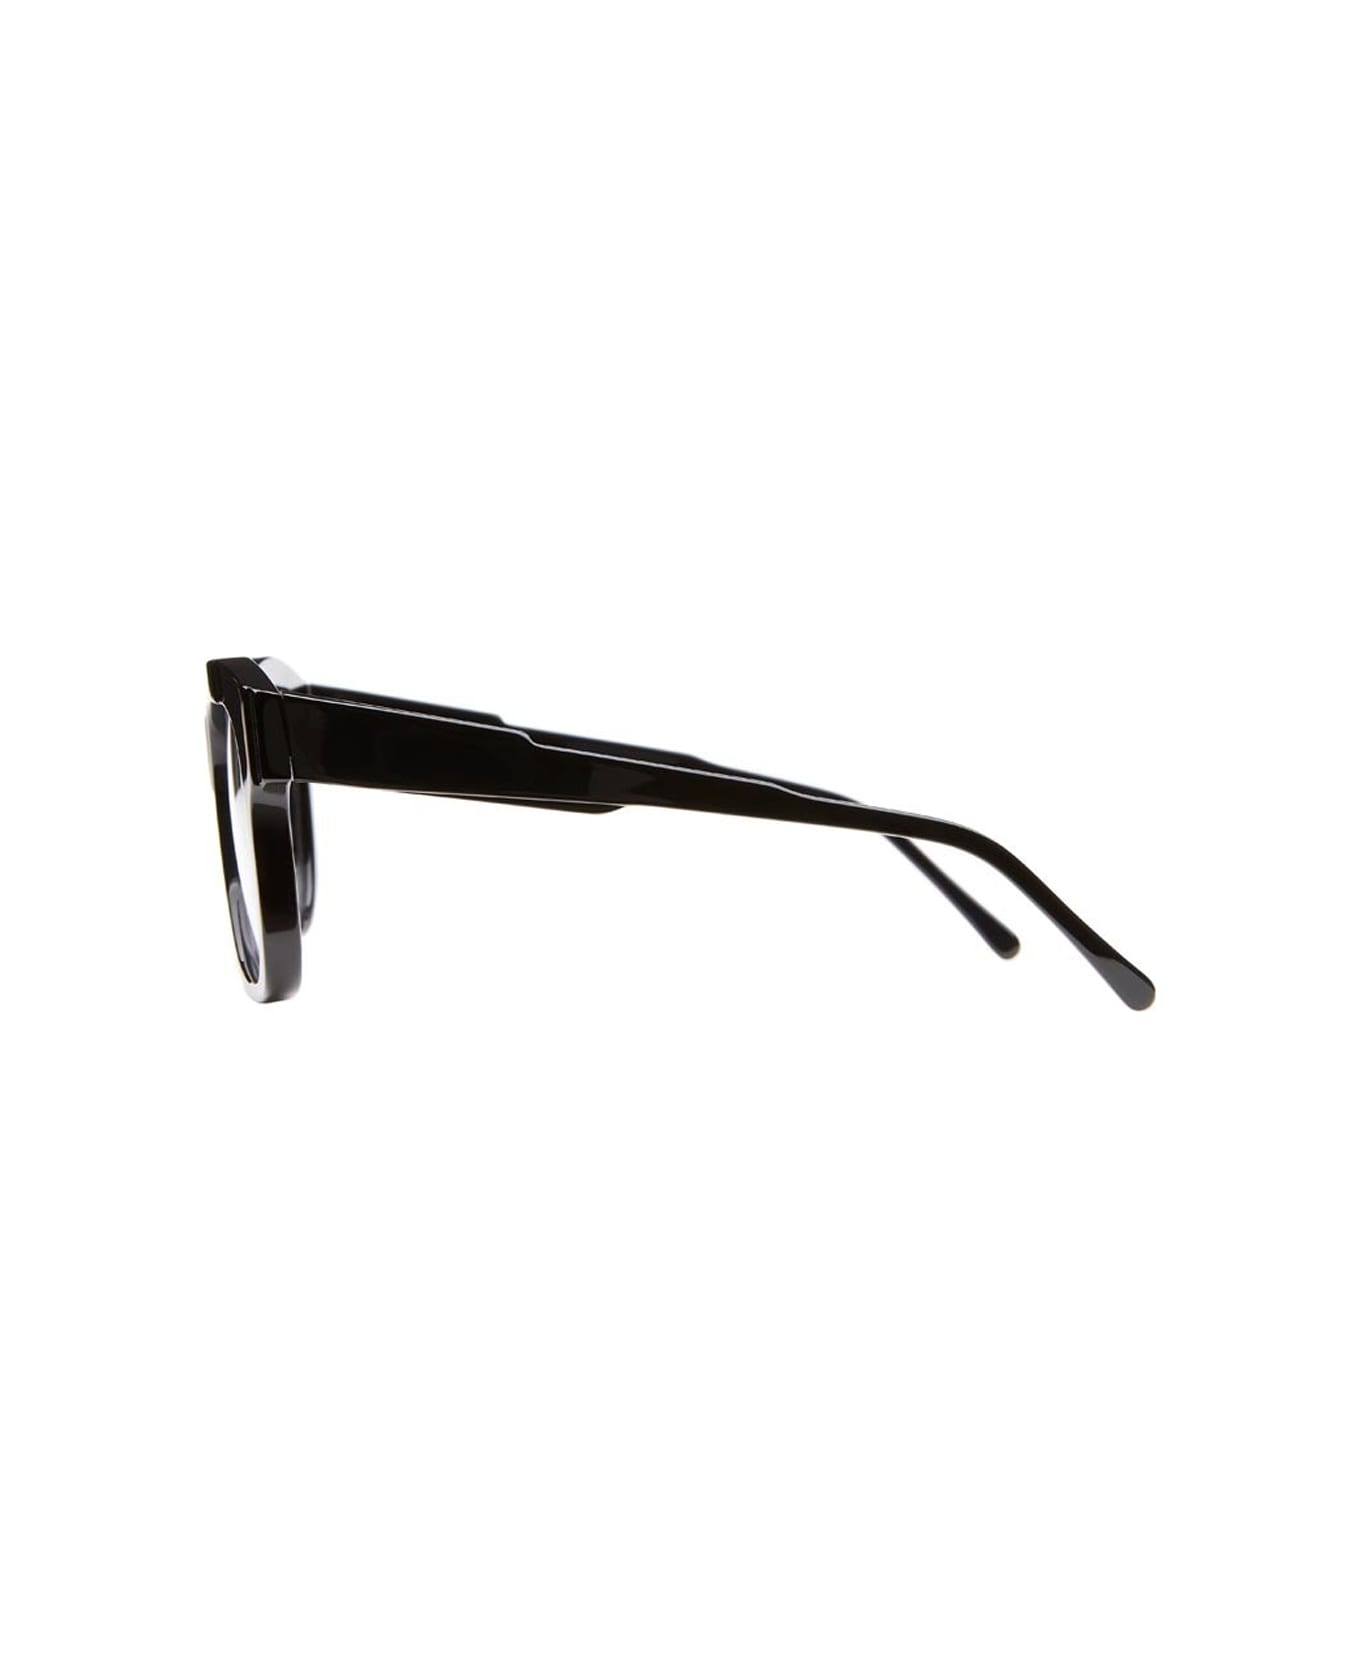 Kuboraum Maske K25 Bs Glasses - Nero アイウェア